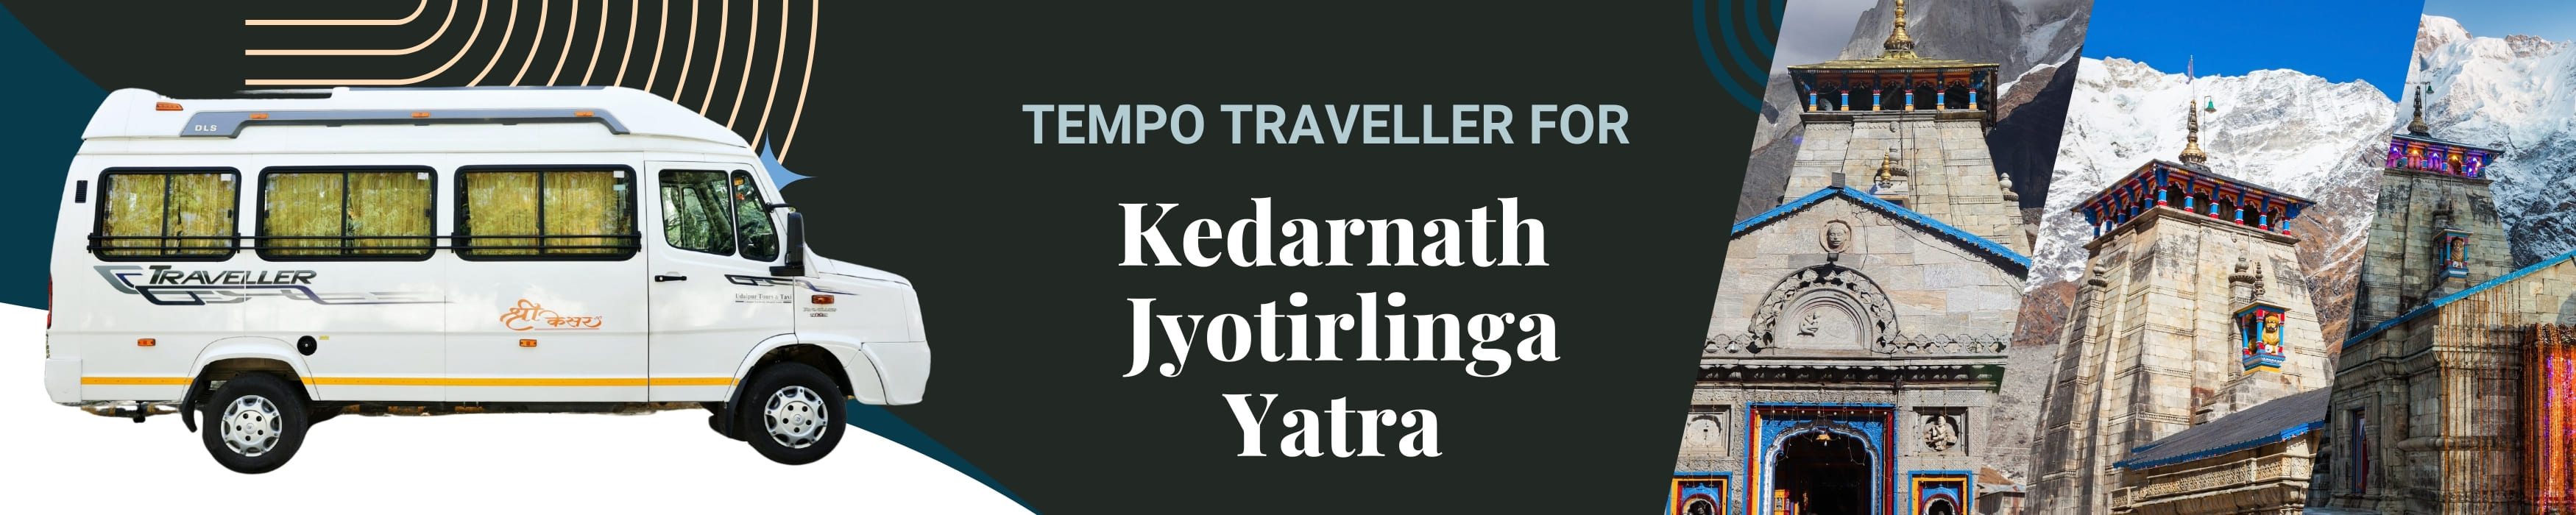 Hire Tempo Traveller For Kedarnath Jyotirlinga Yatra